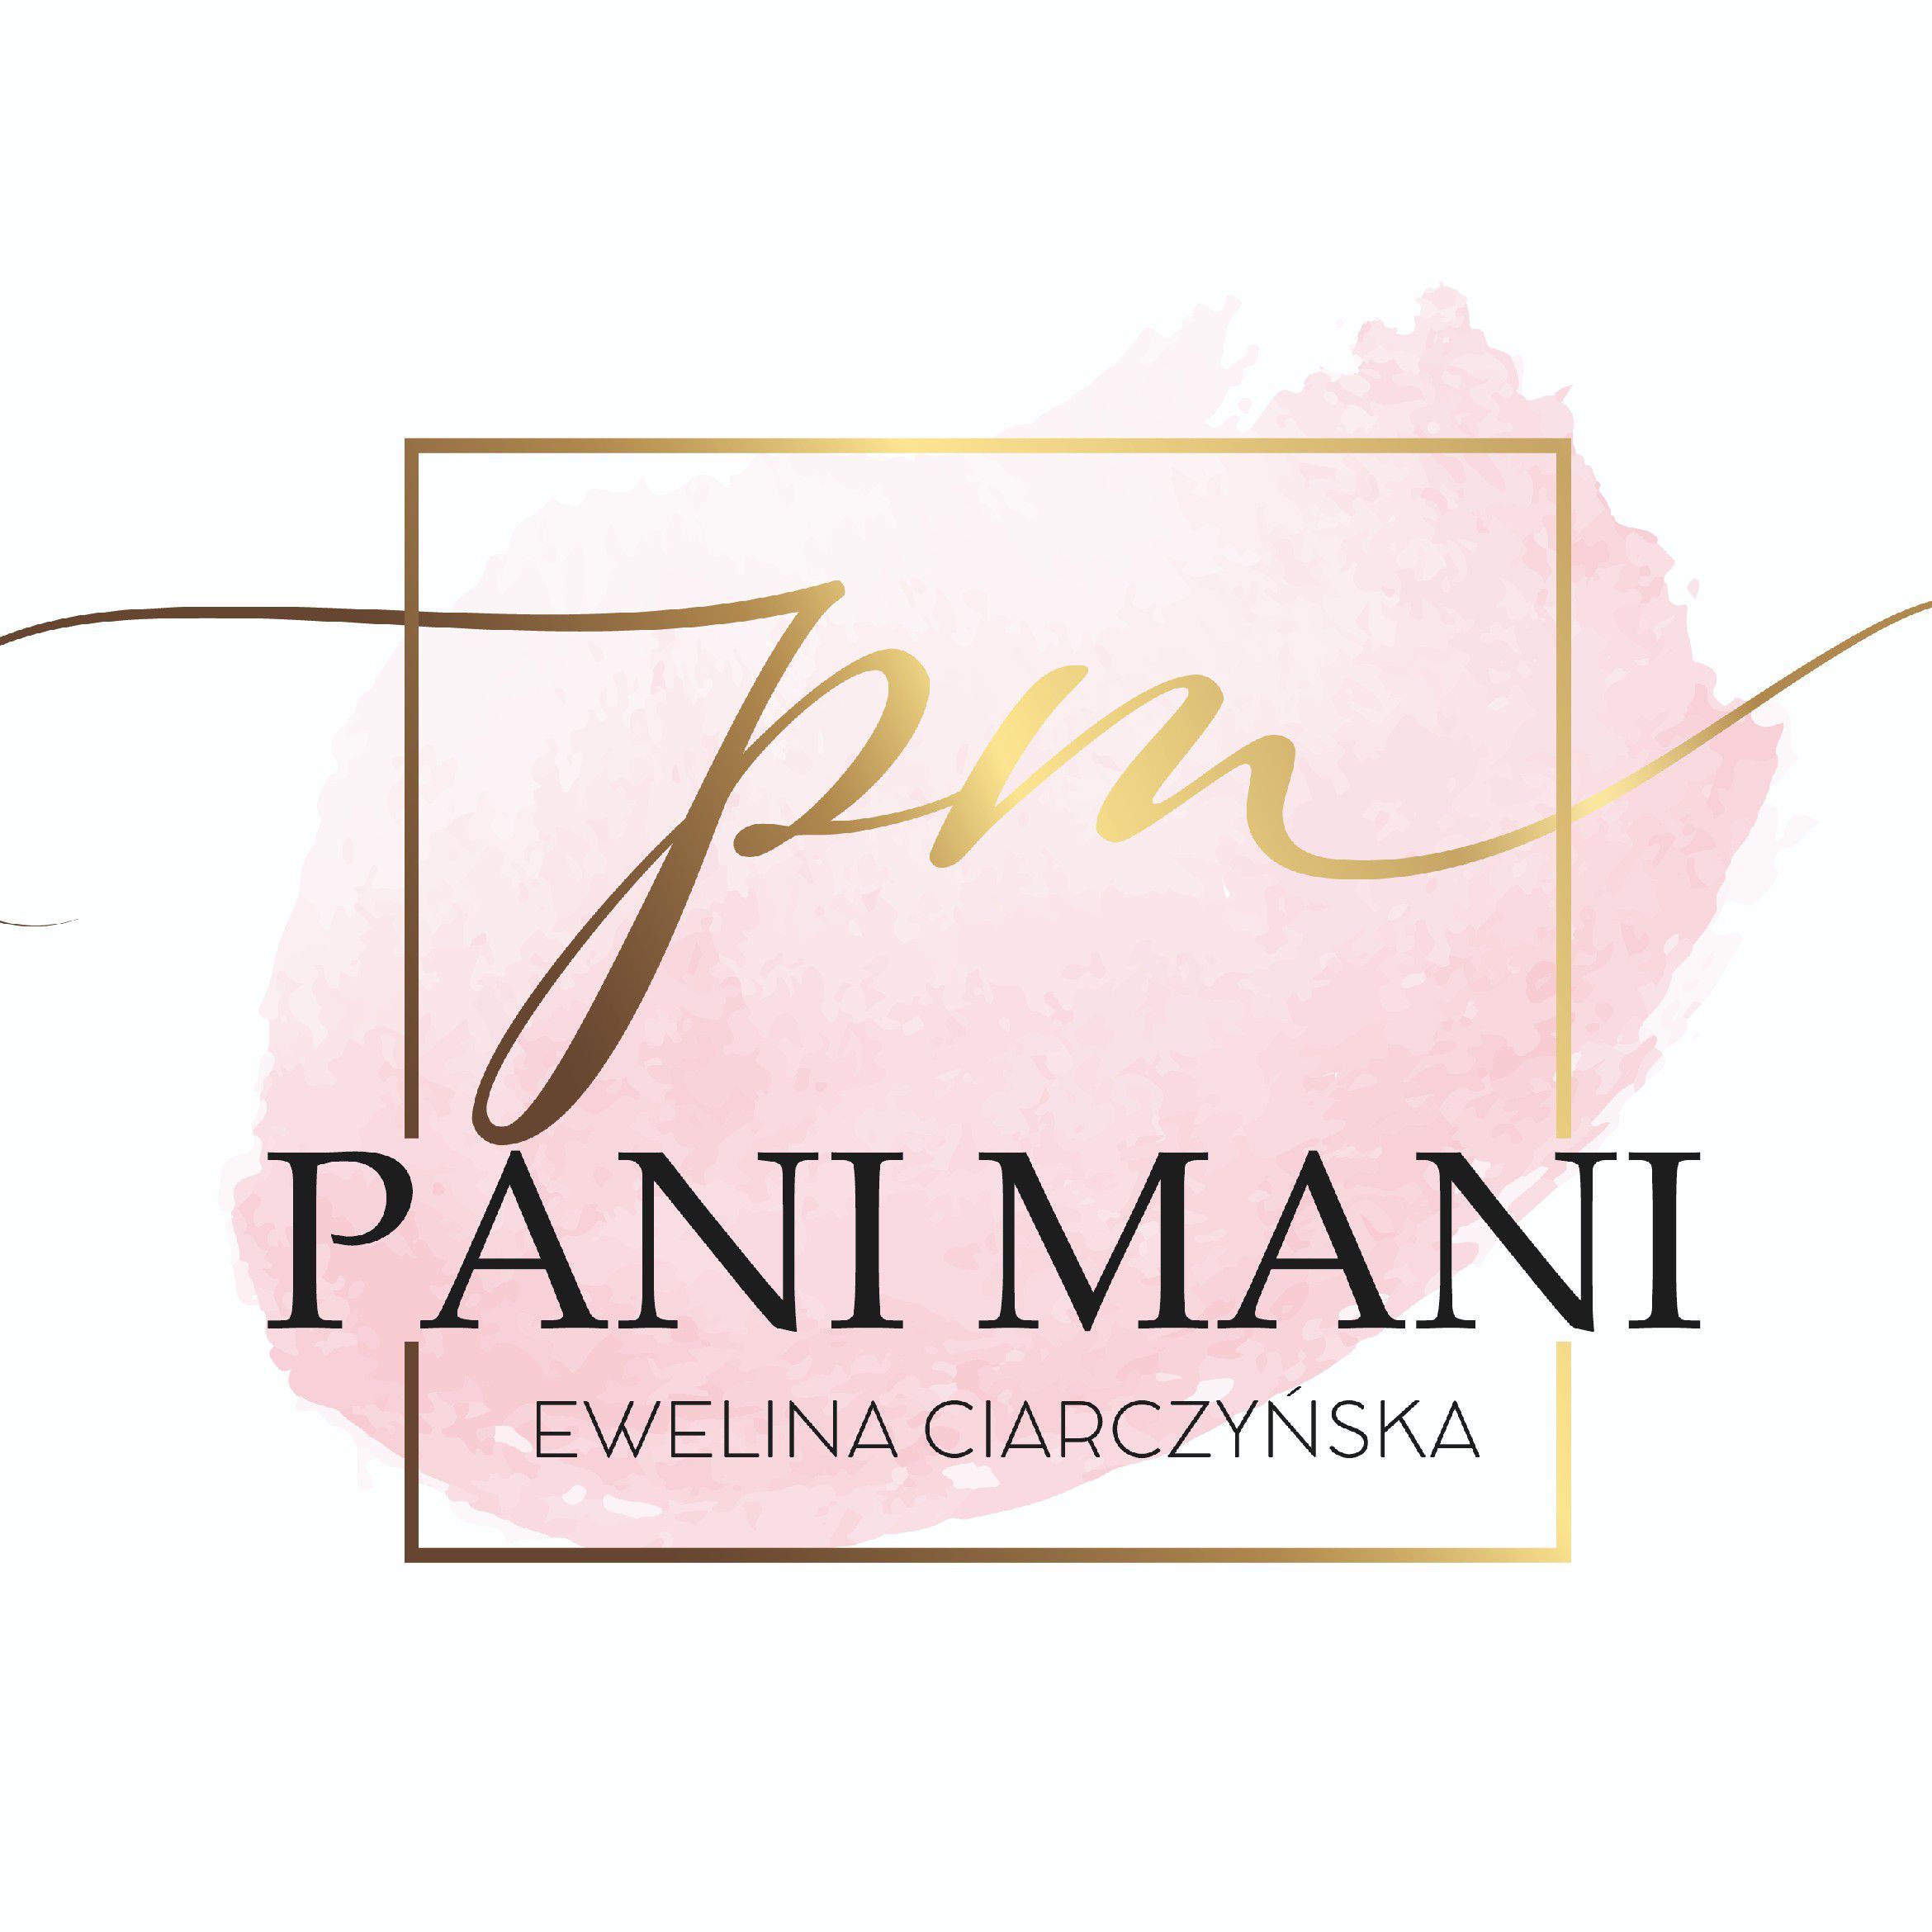 „PANI MANI” Ewelina Rutkowska, Jesienna 7A, 09-407, Płock